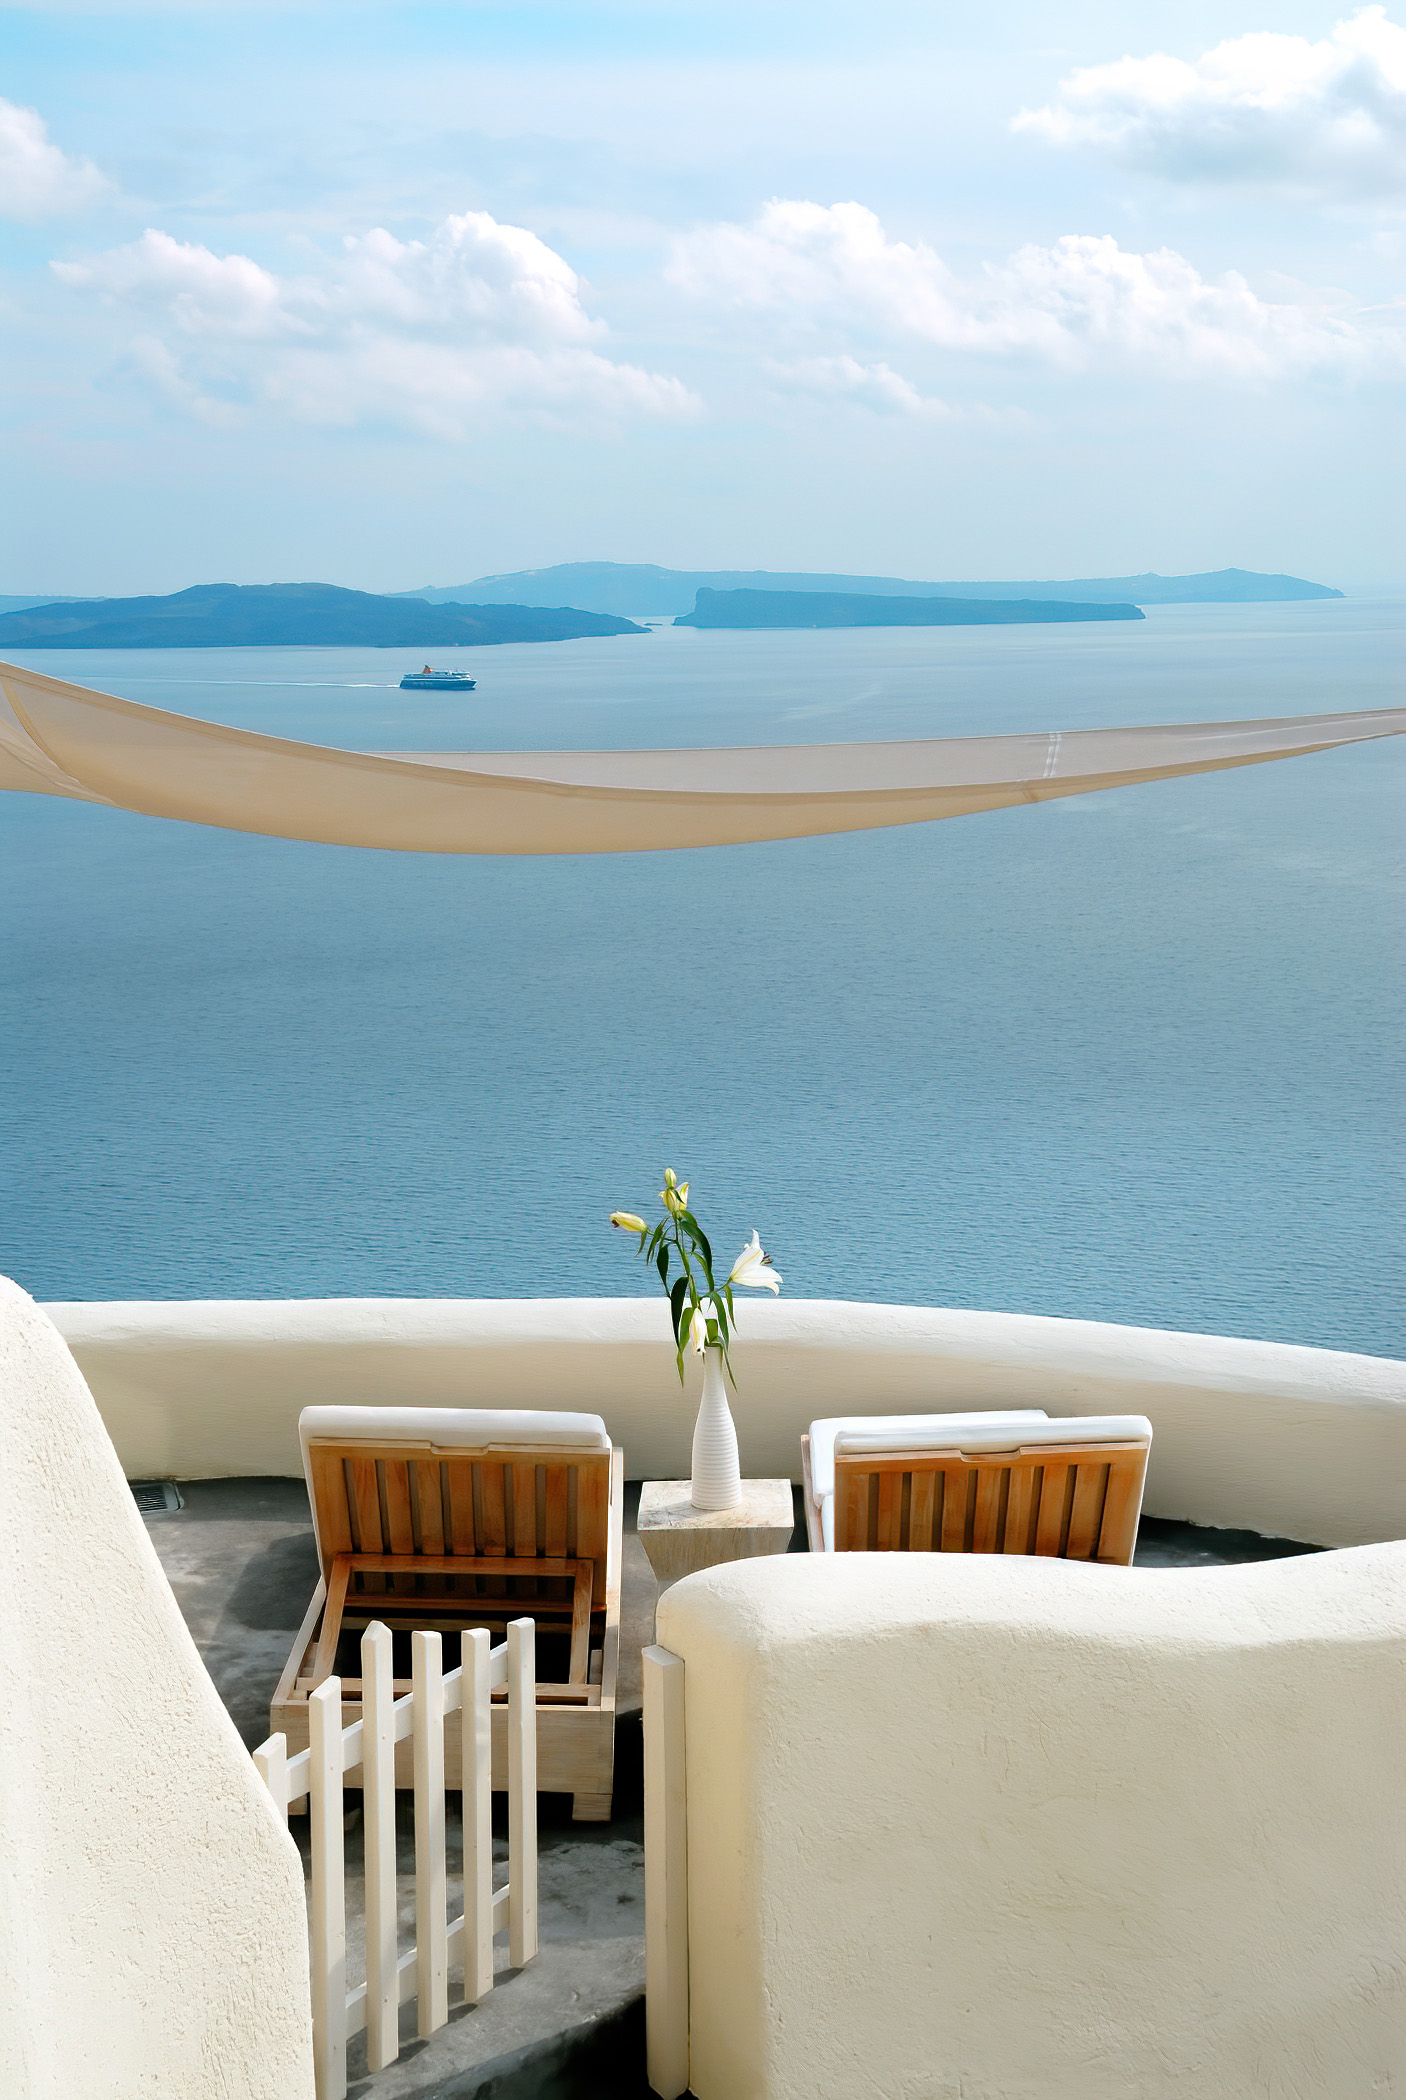 Mystique Hotel Santorini – Oia, Santorini Island, Greece – Clifftop Balcony View